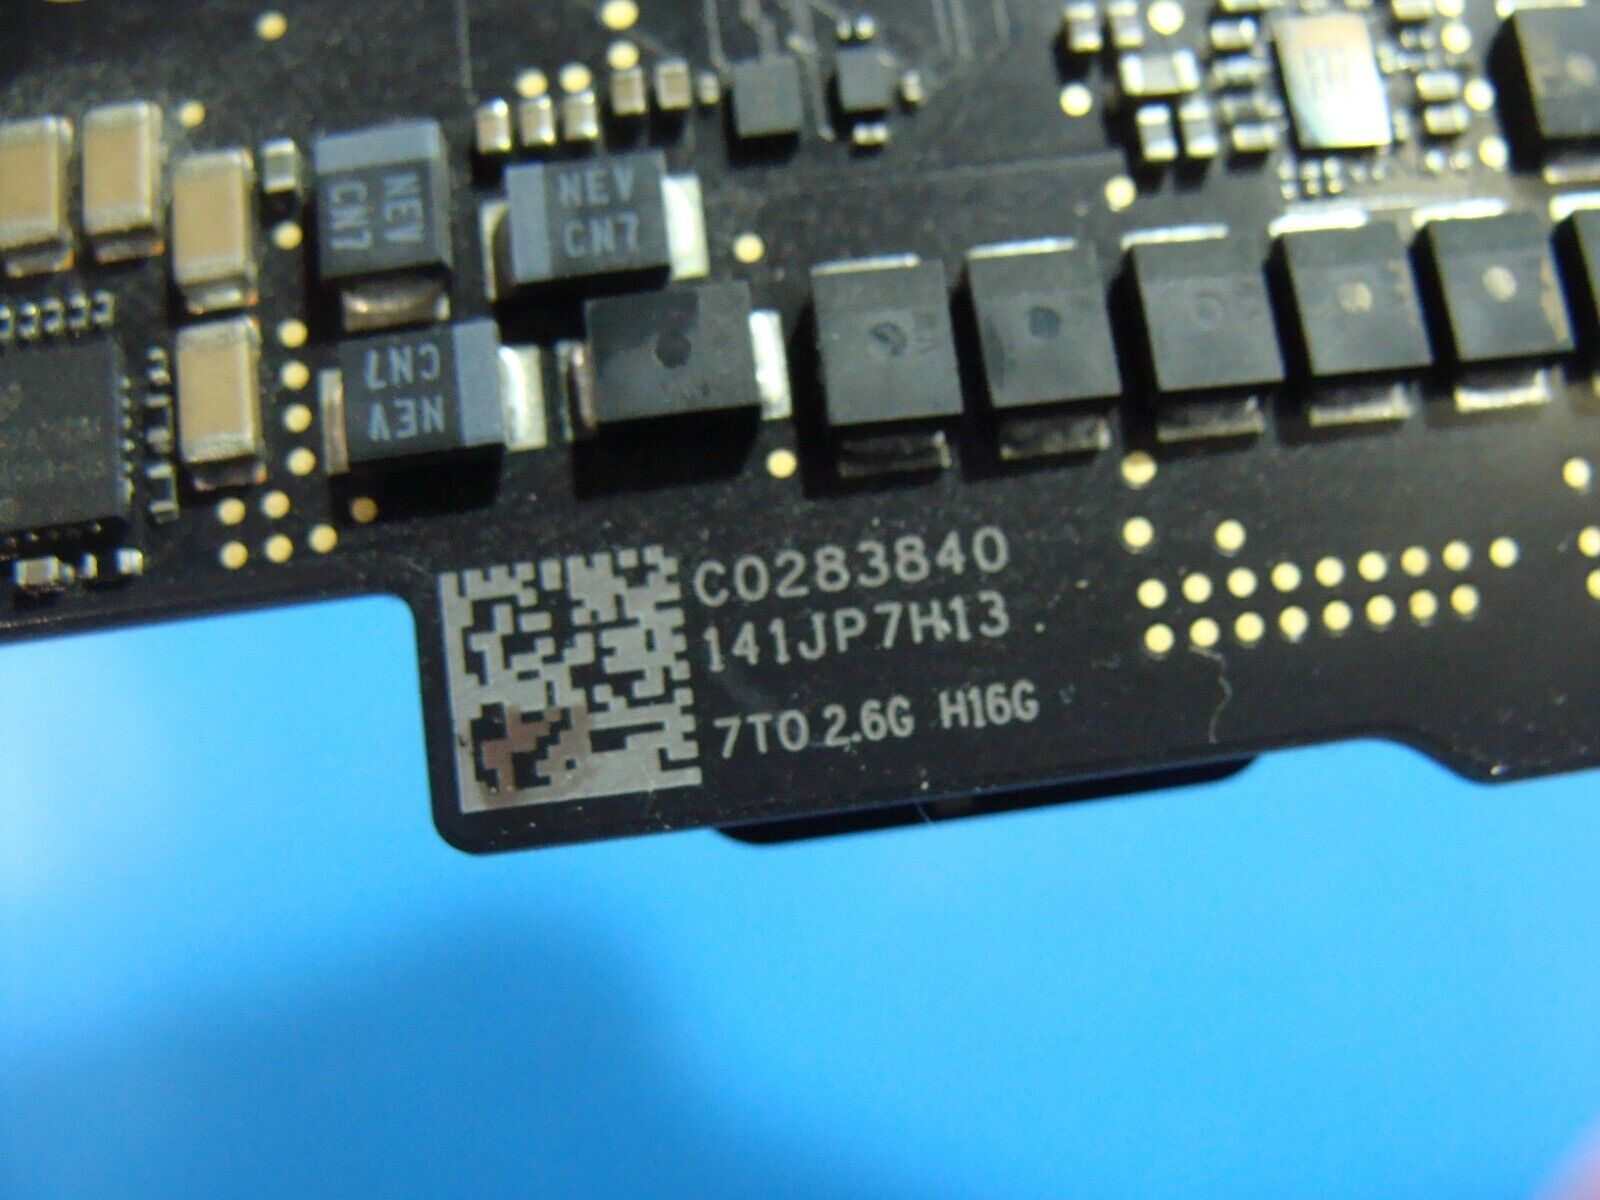 MacBook Pro A1990 MR932LL i7 2.6GHz 16GB 512GB 560X Logic Board 661-10009 AS IS